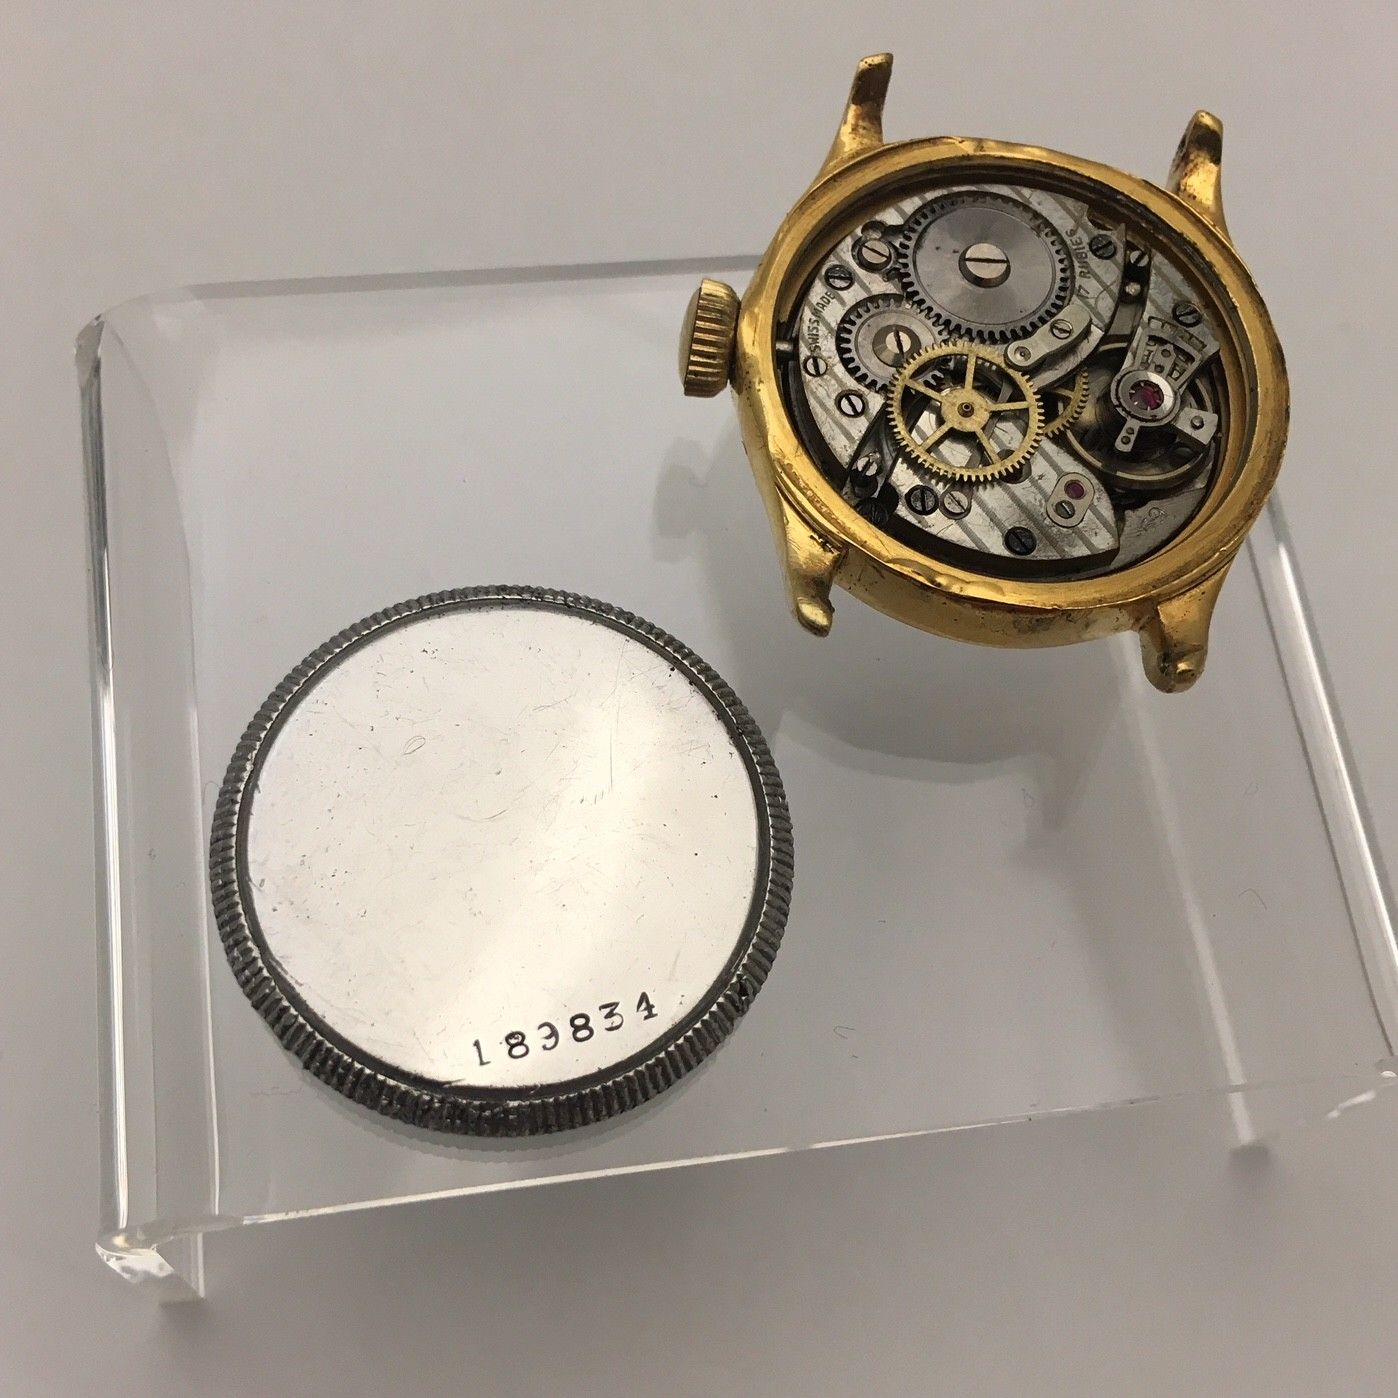 Rolex Oyster Lipton Shock Resisting Watch Ref. 3478 Rare